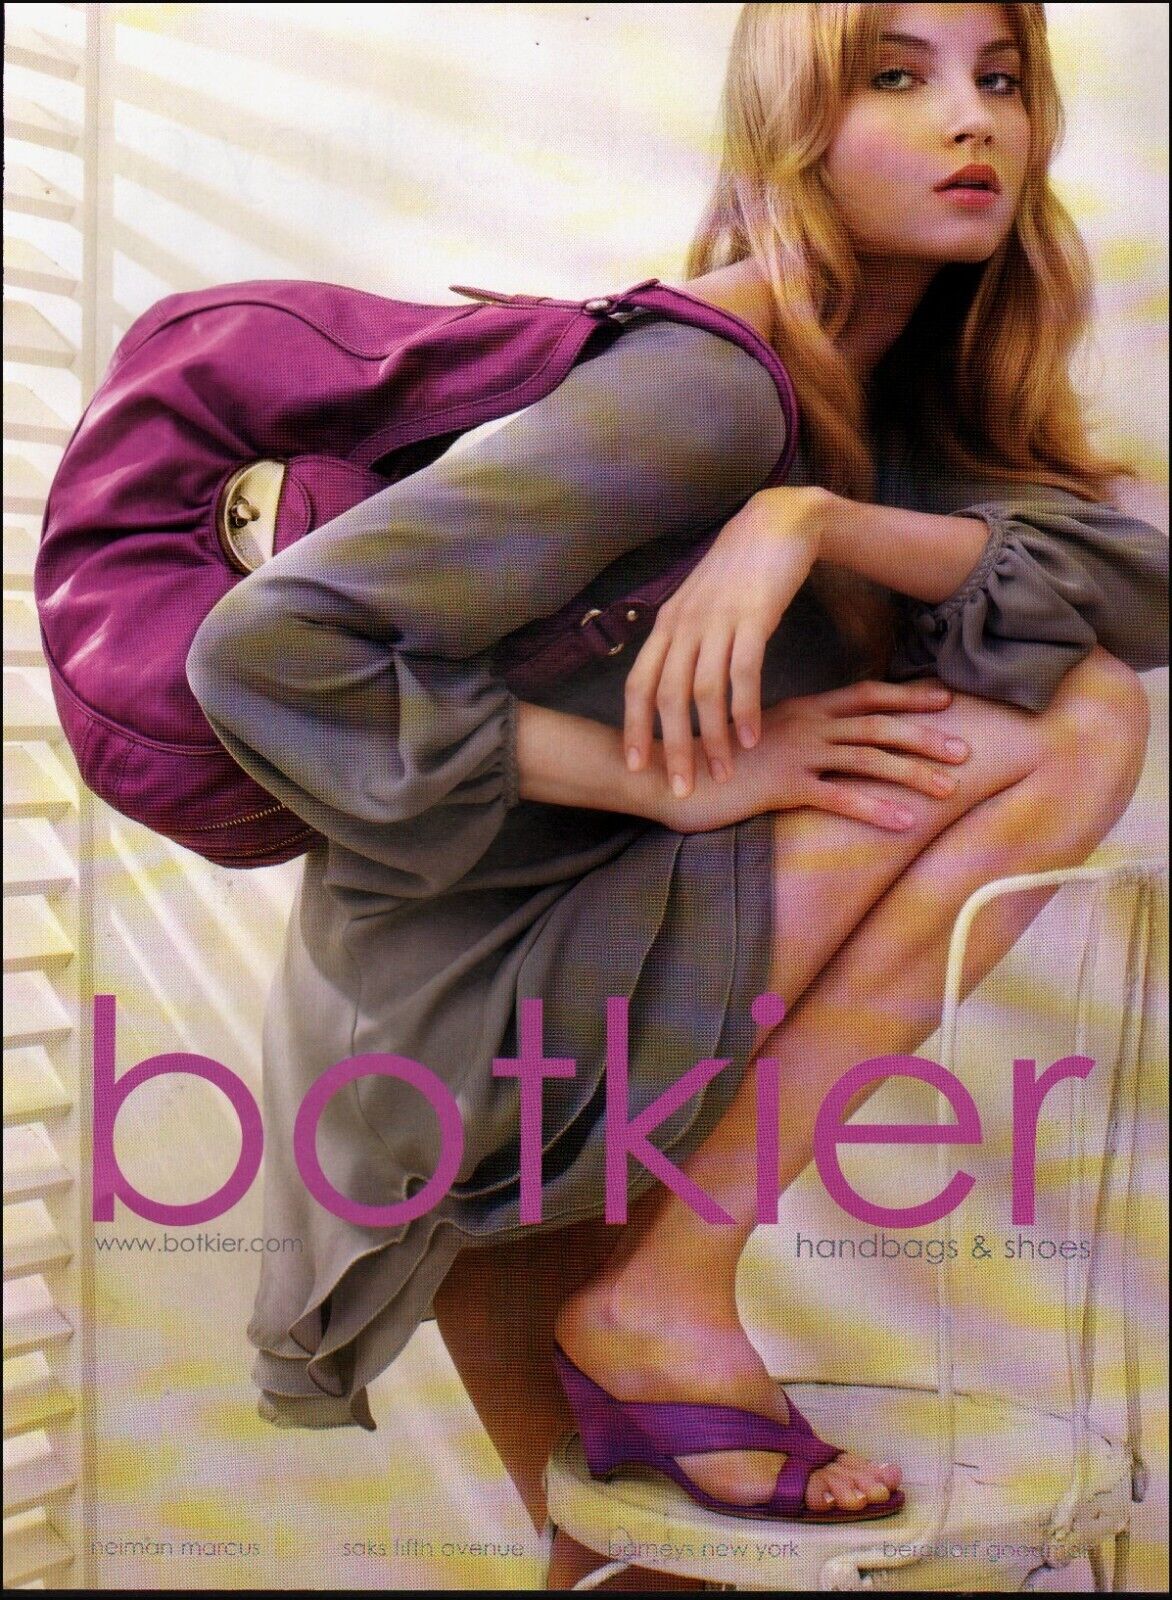 2008 Print ad botkier handbags & Shoes Sexy Blonde model dress    03/24/23